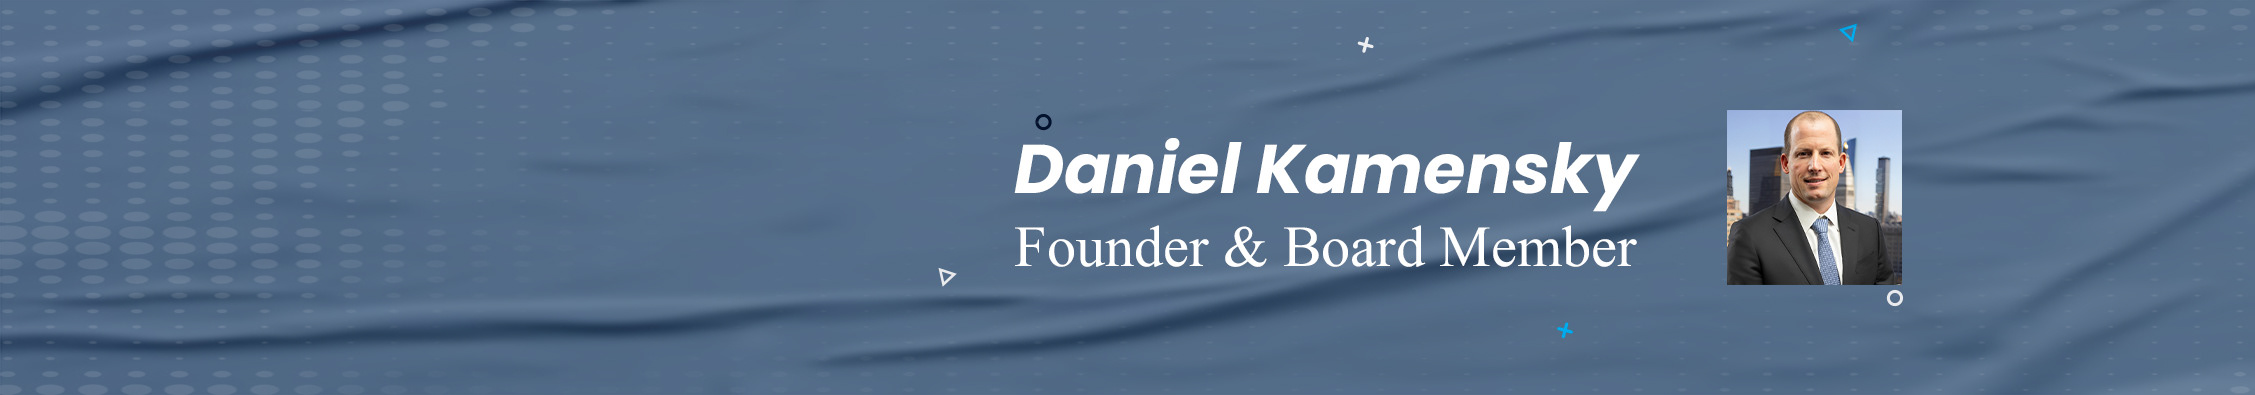 Daniel Kamensky's profile banner